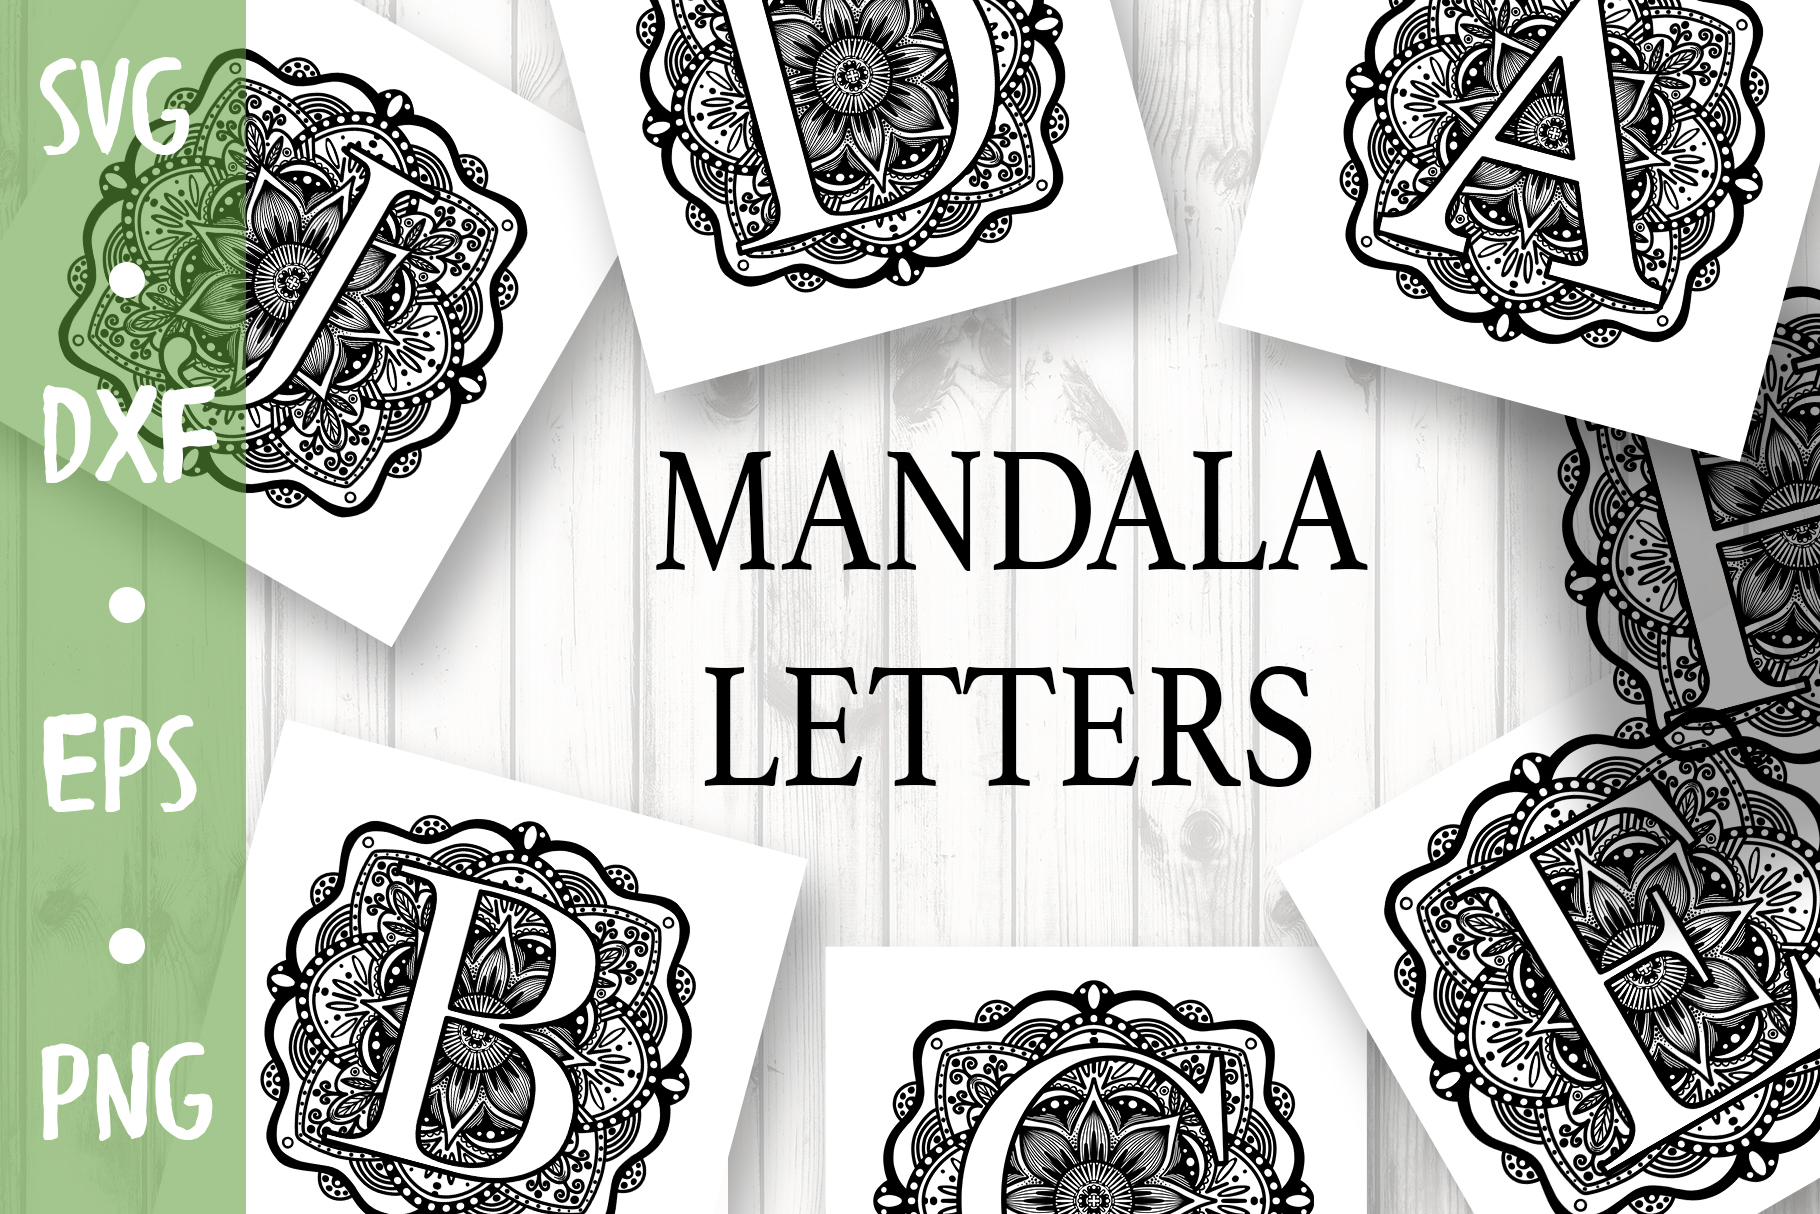 Mandala letters - SVG CUT FILES